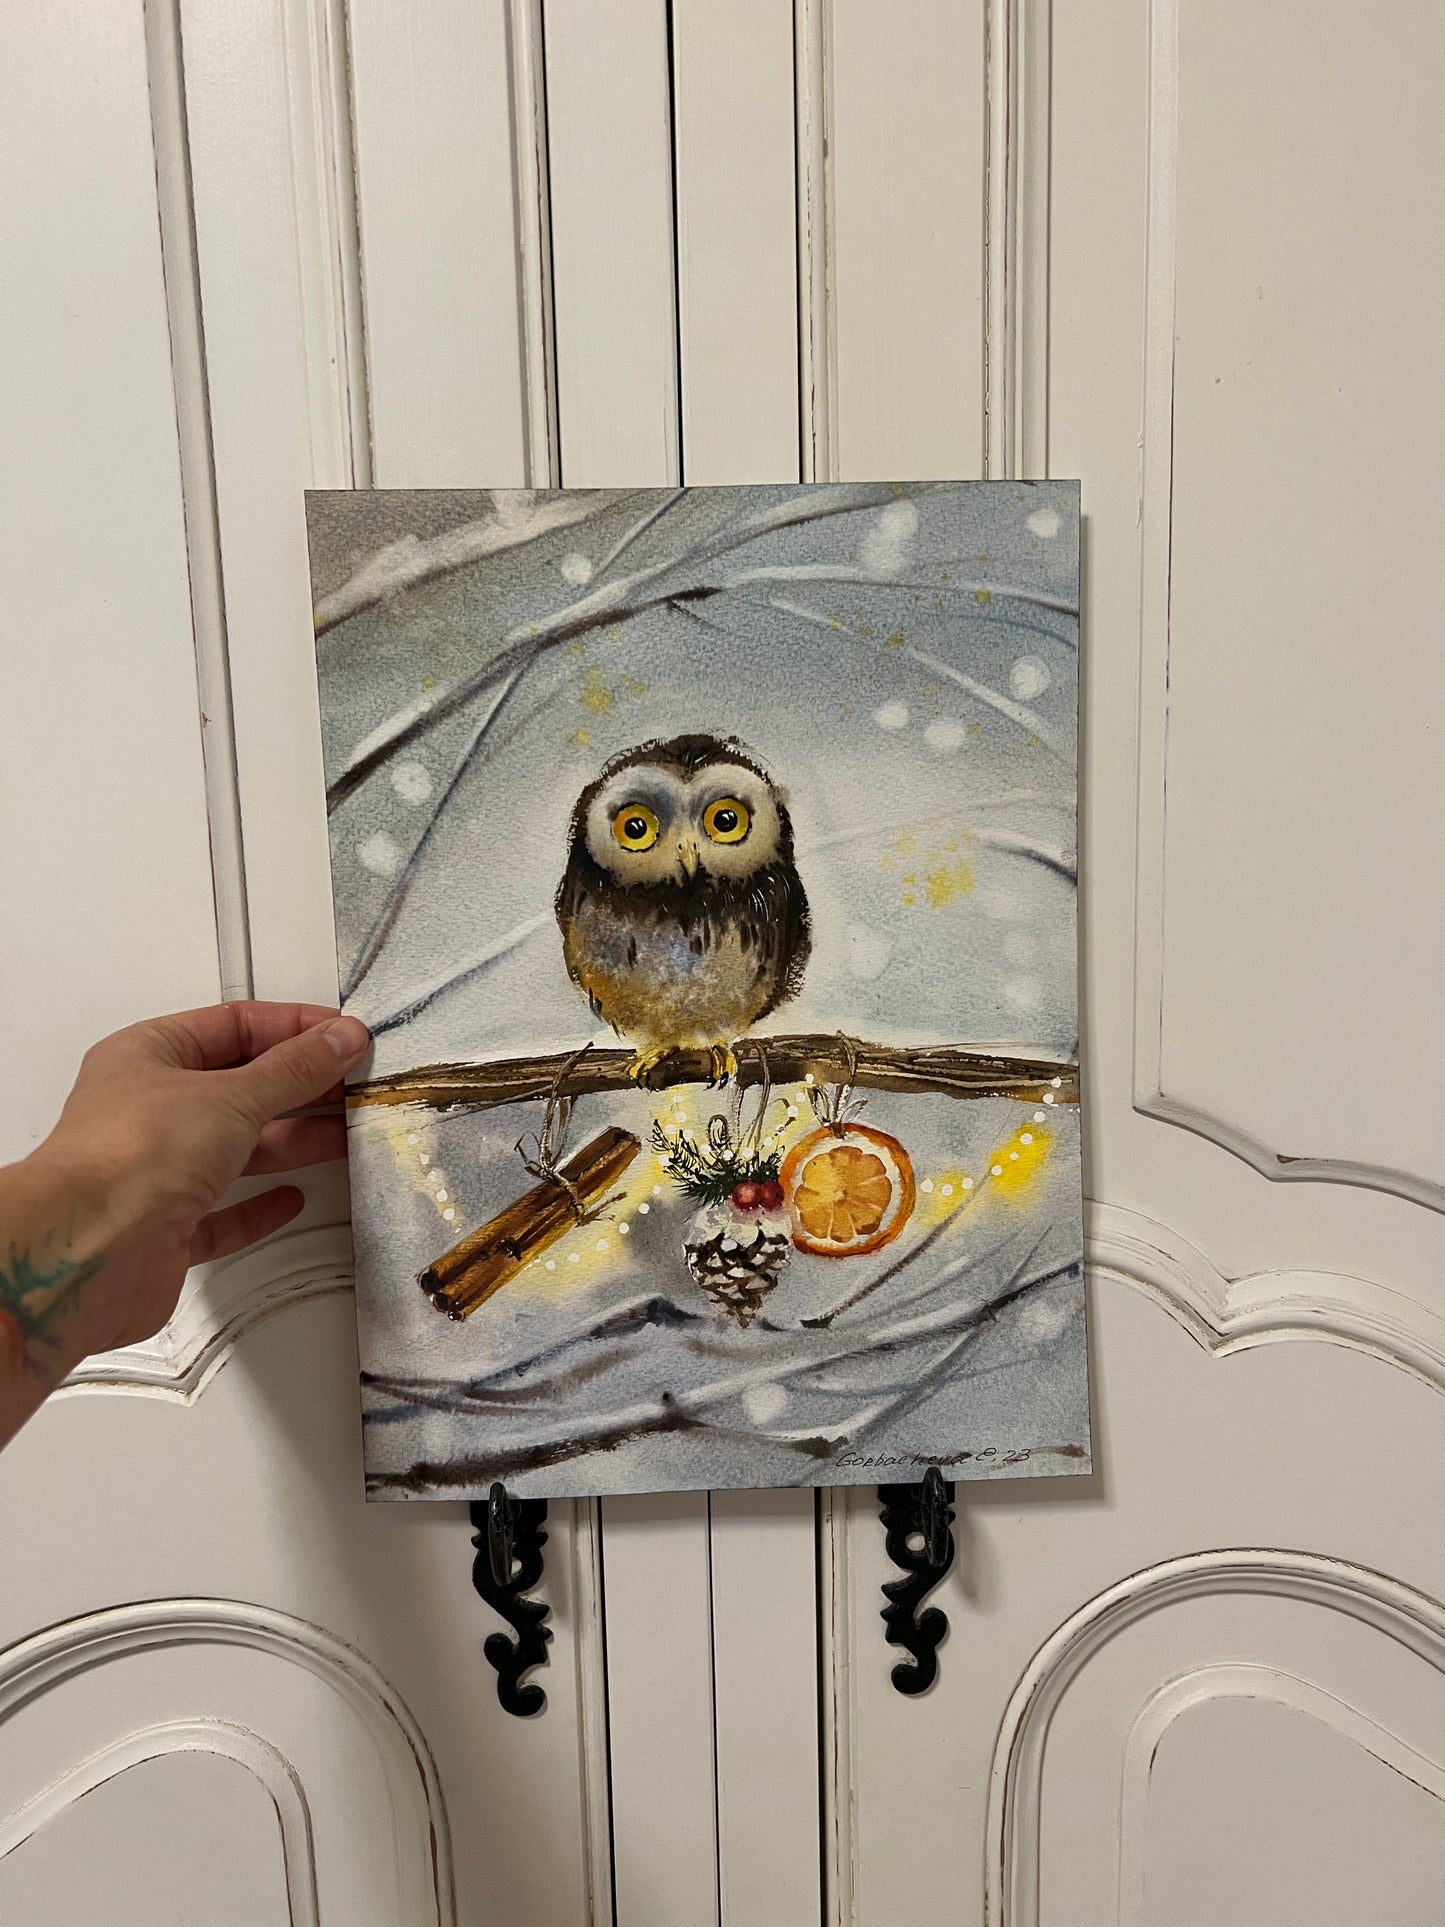 Christmas Owl Painting Original, Small Watercolor Artwork , New Year Gift, Bird Wall Art Decor, Christmas Gift